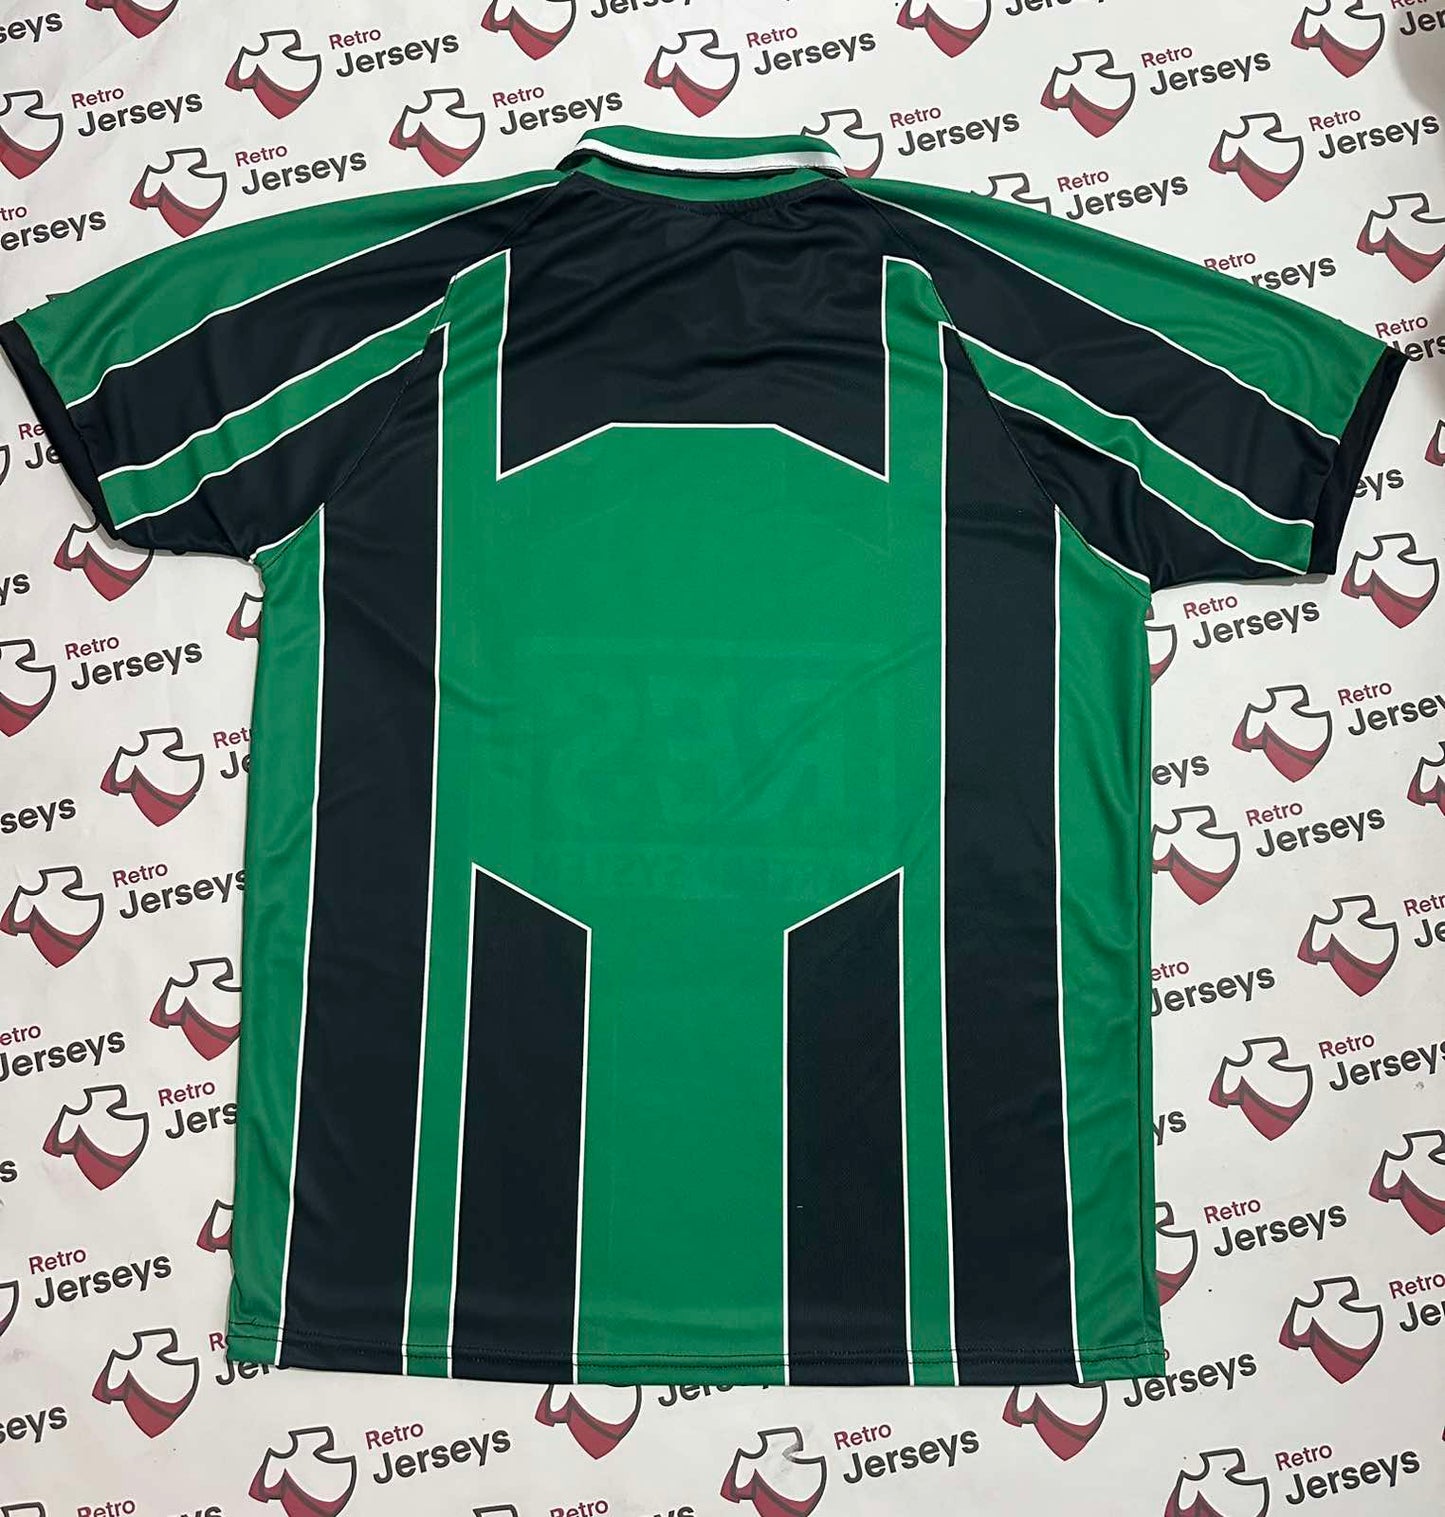 Cercle Brugge Shirt 1998-2000 Home - Retro Jerseys, Cercle Brugge Retro Shirt